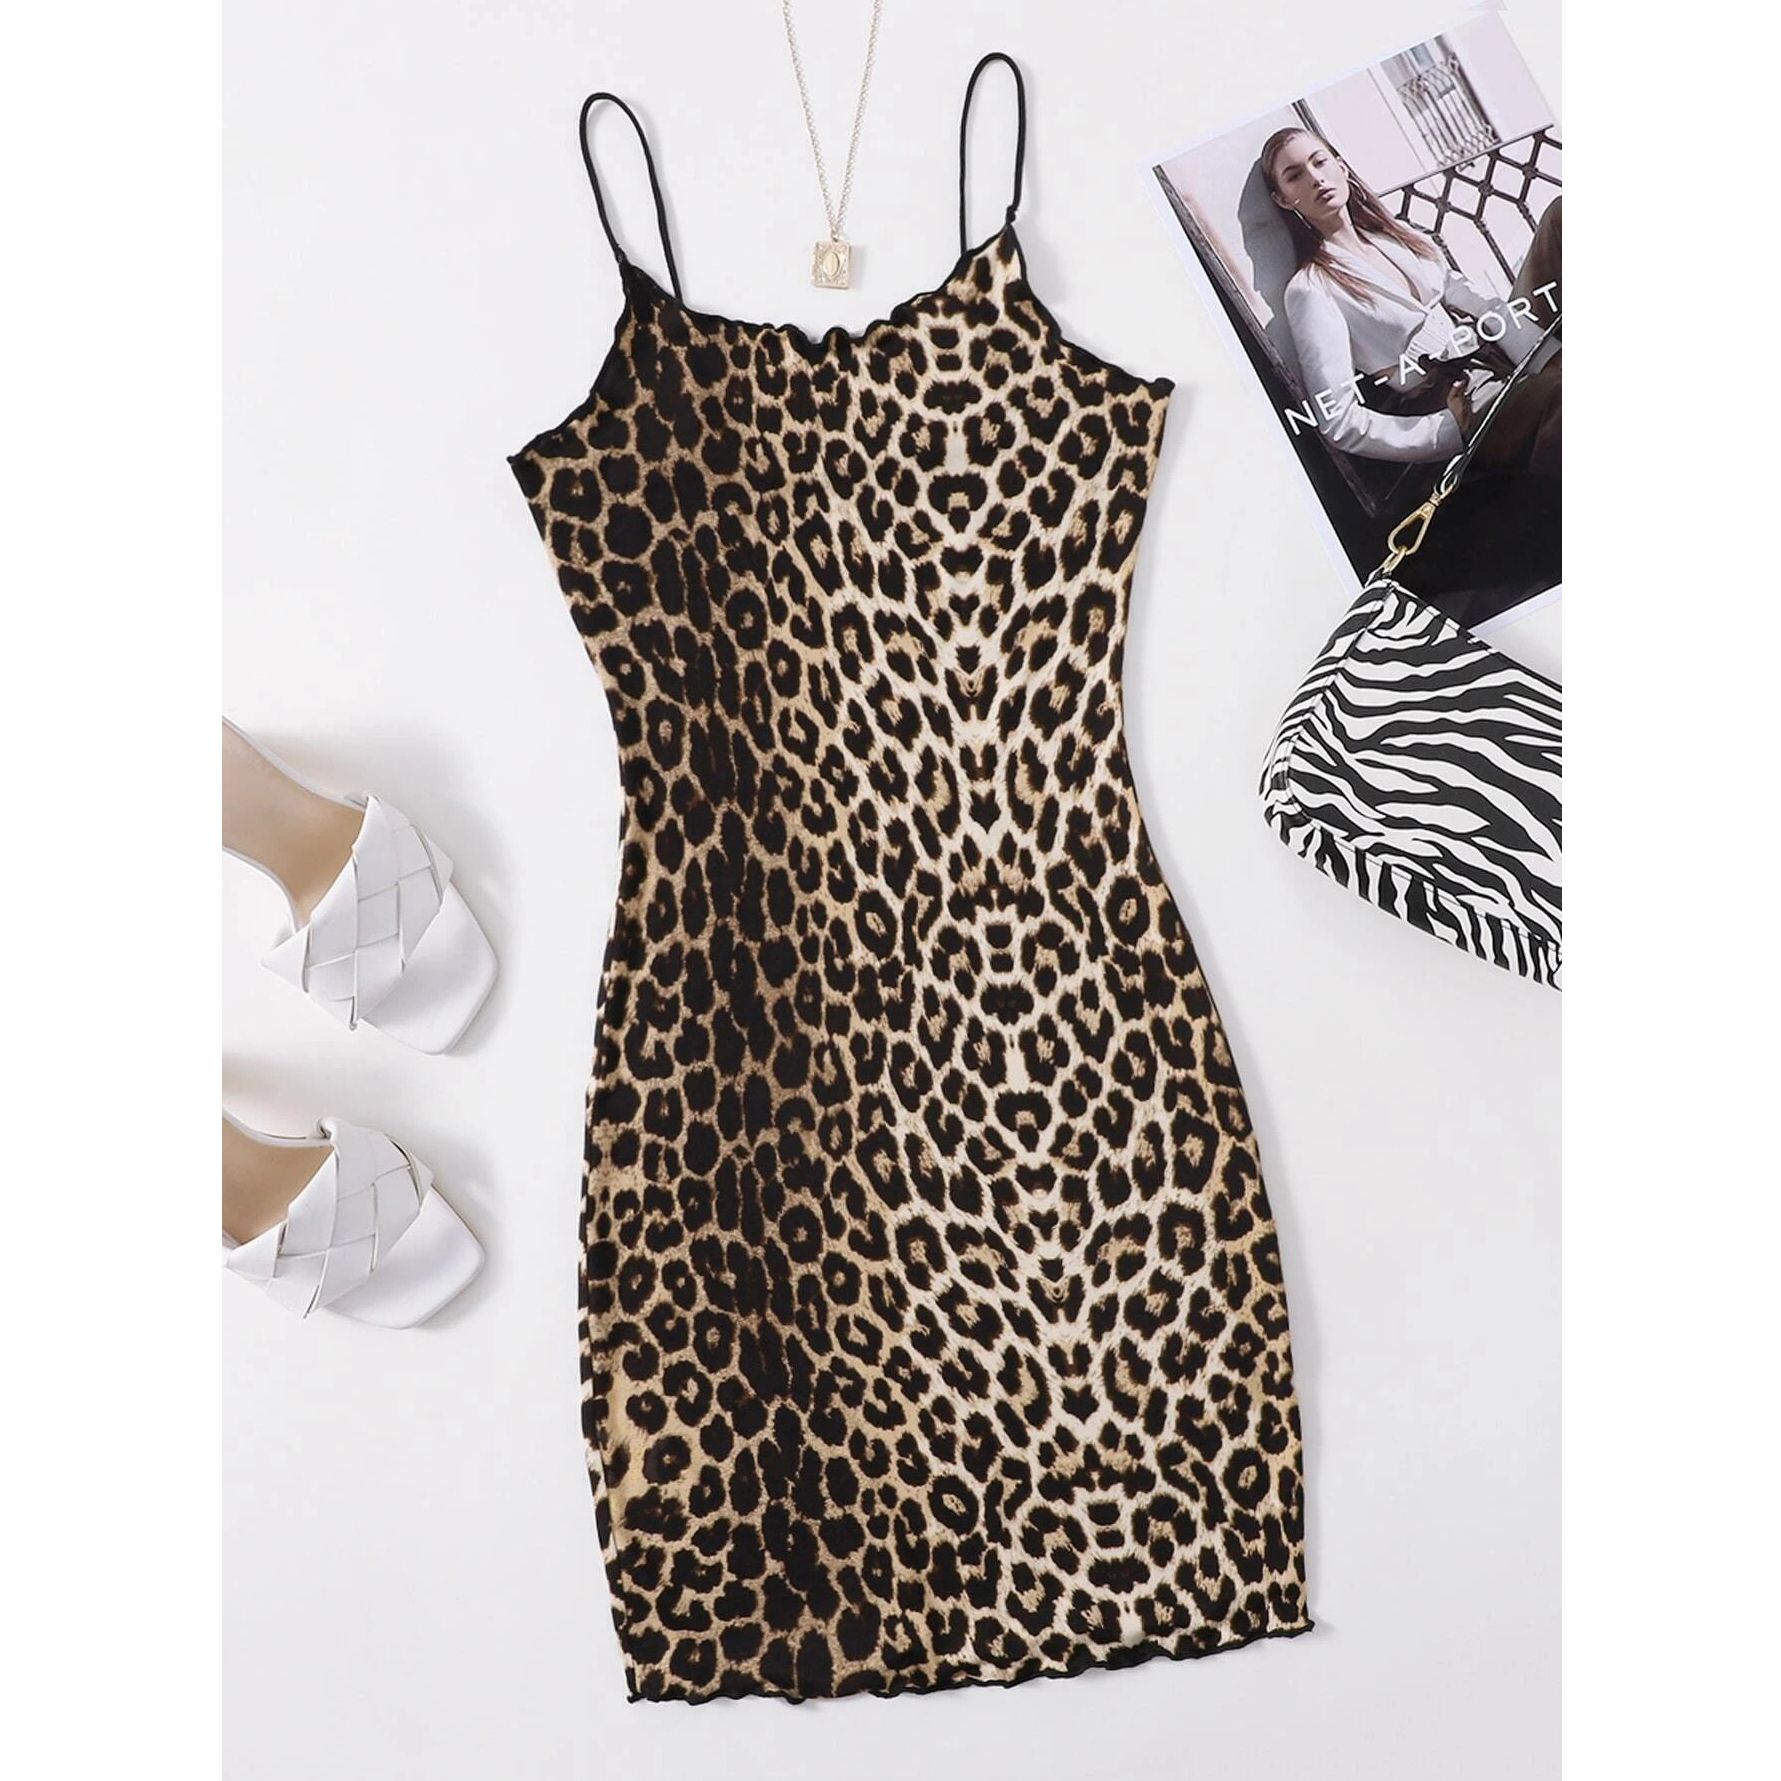 Lettuce Trim Leopard Dress - M